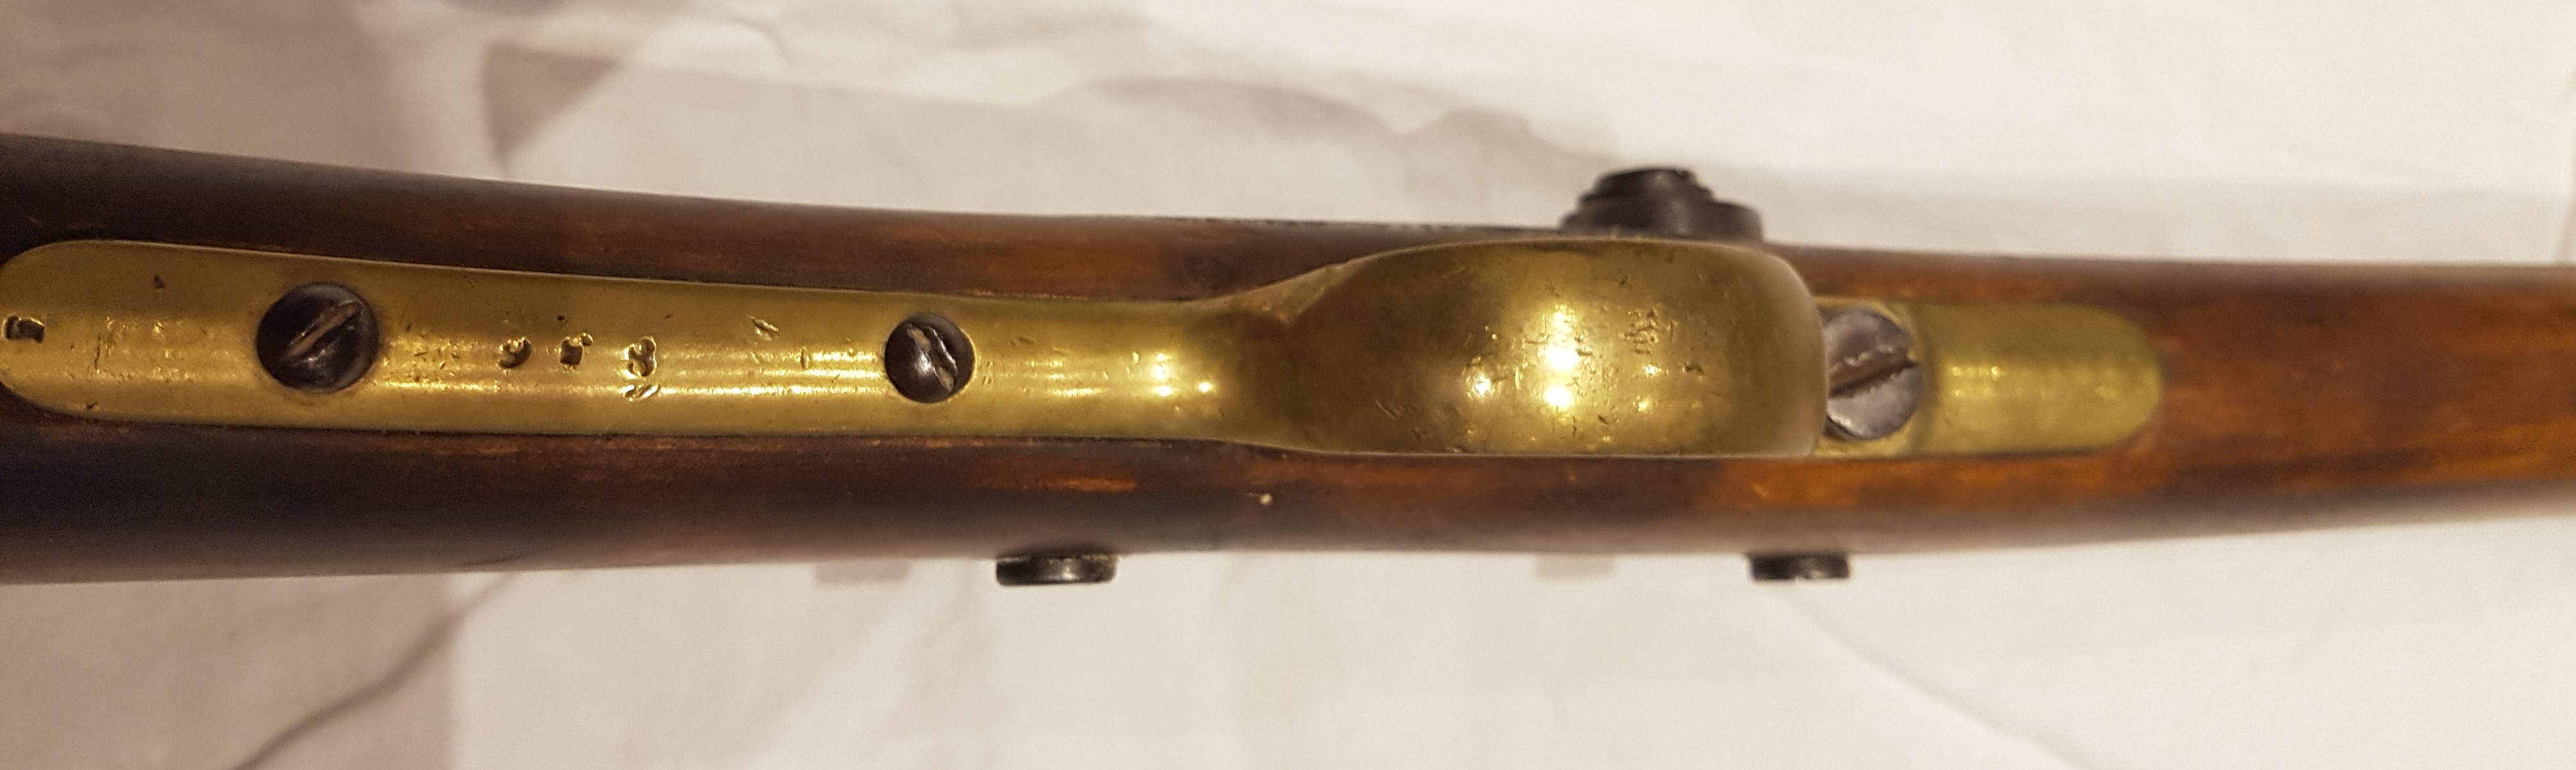 ./guns/rifle/bilder/Muskett-Kongsberg-M1843-Marine-1849-856-4.jpg